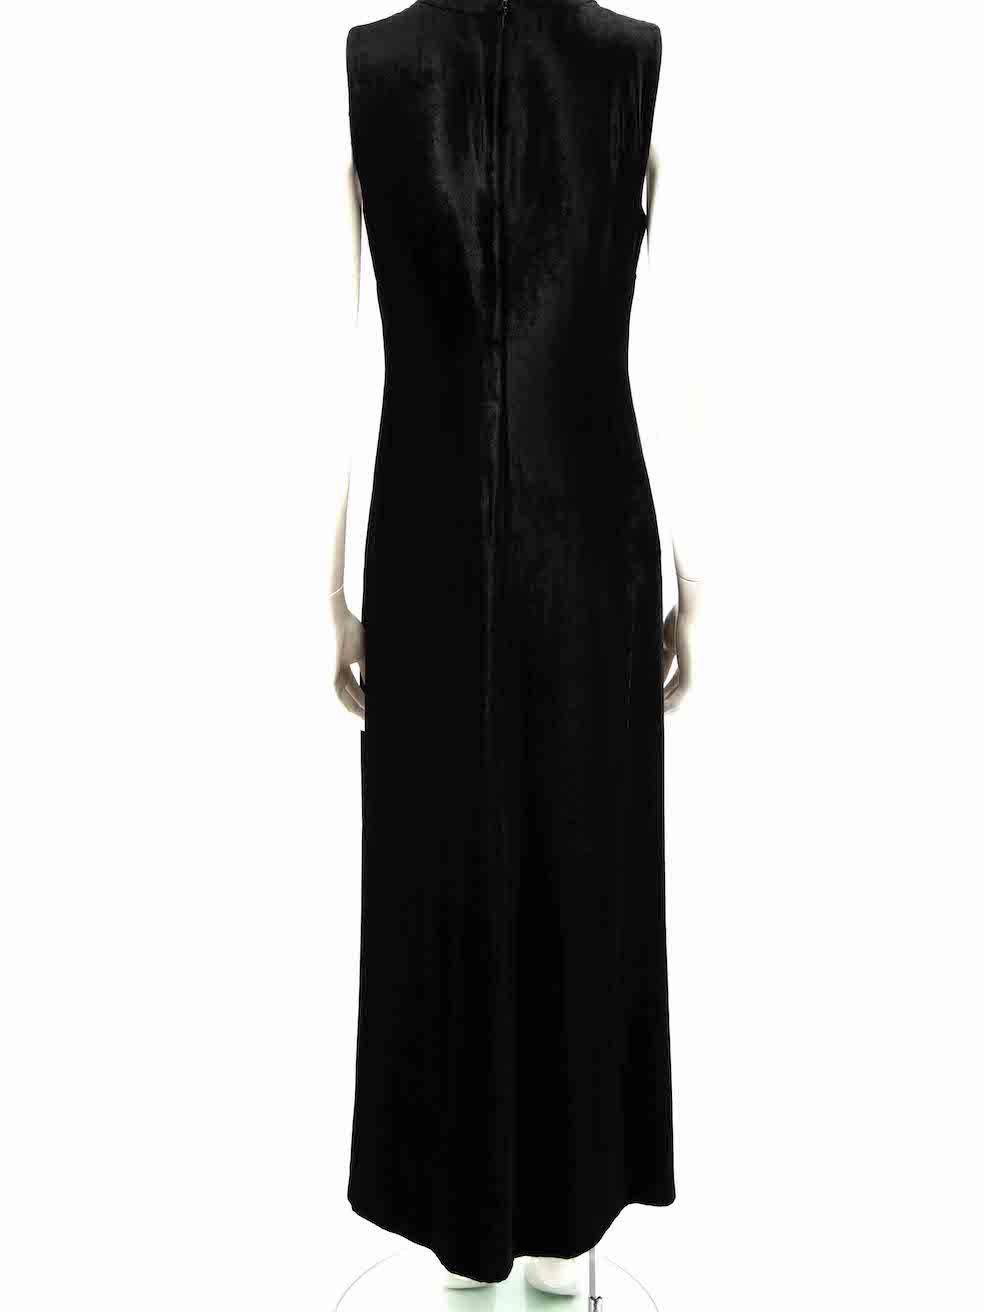 A.L.C. Black Velvet V-Neck Sleeveless Dress Size S In Good Condition For Sale In London, GB